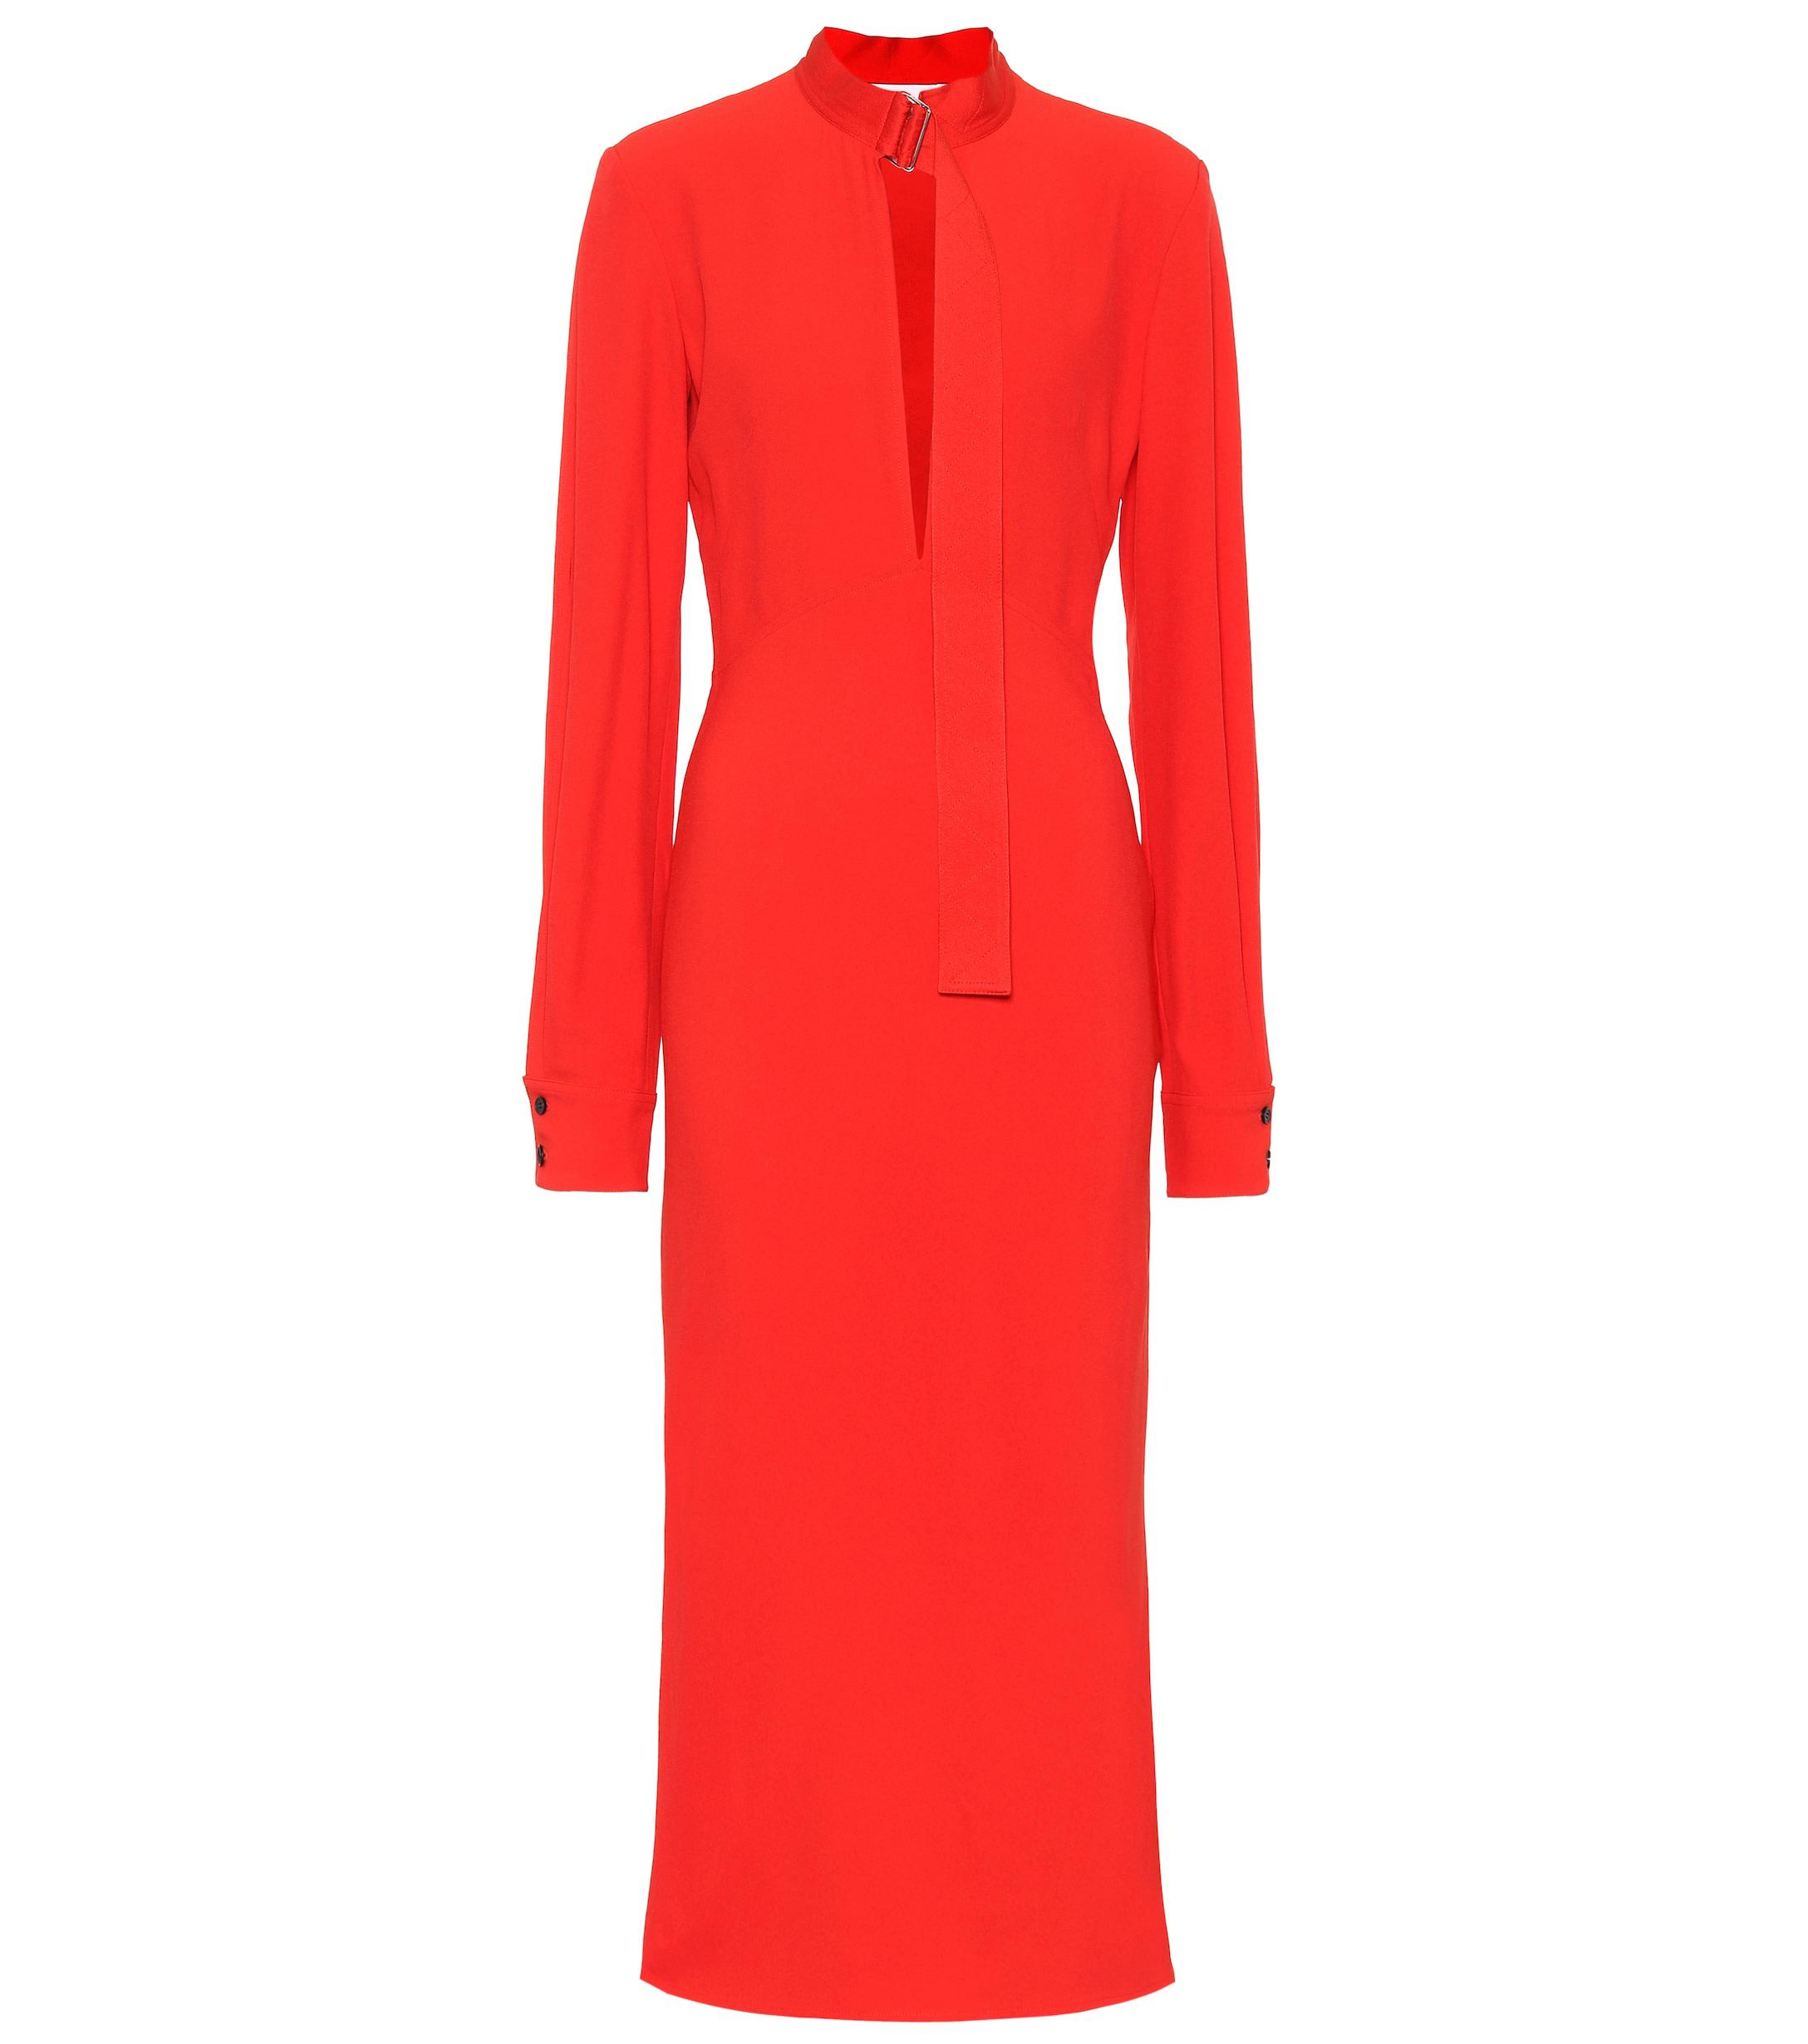 Lyst - Victoria Beckham Crêpe Midi Dress in Red